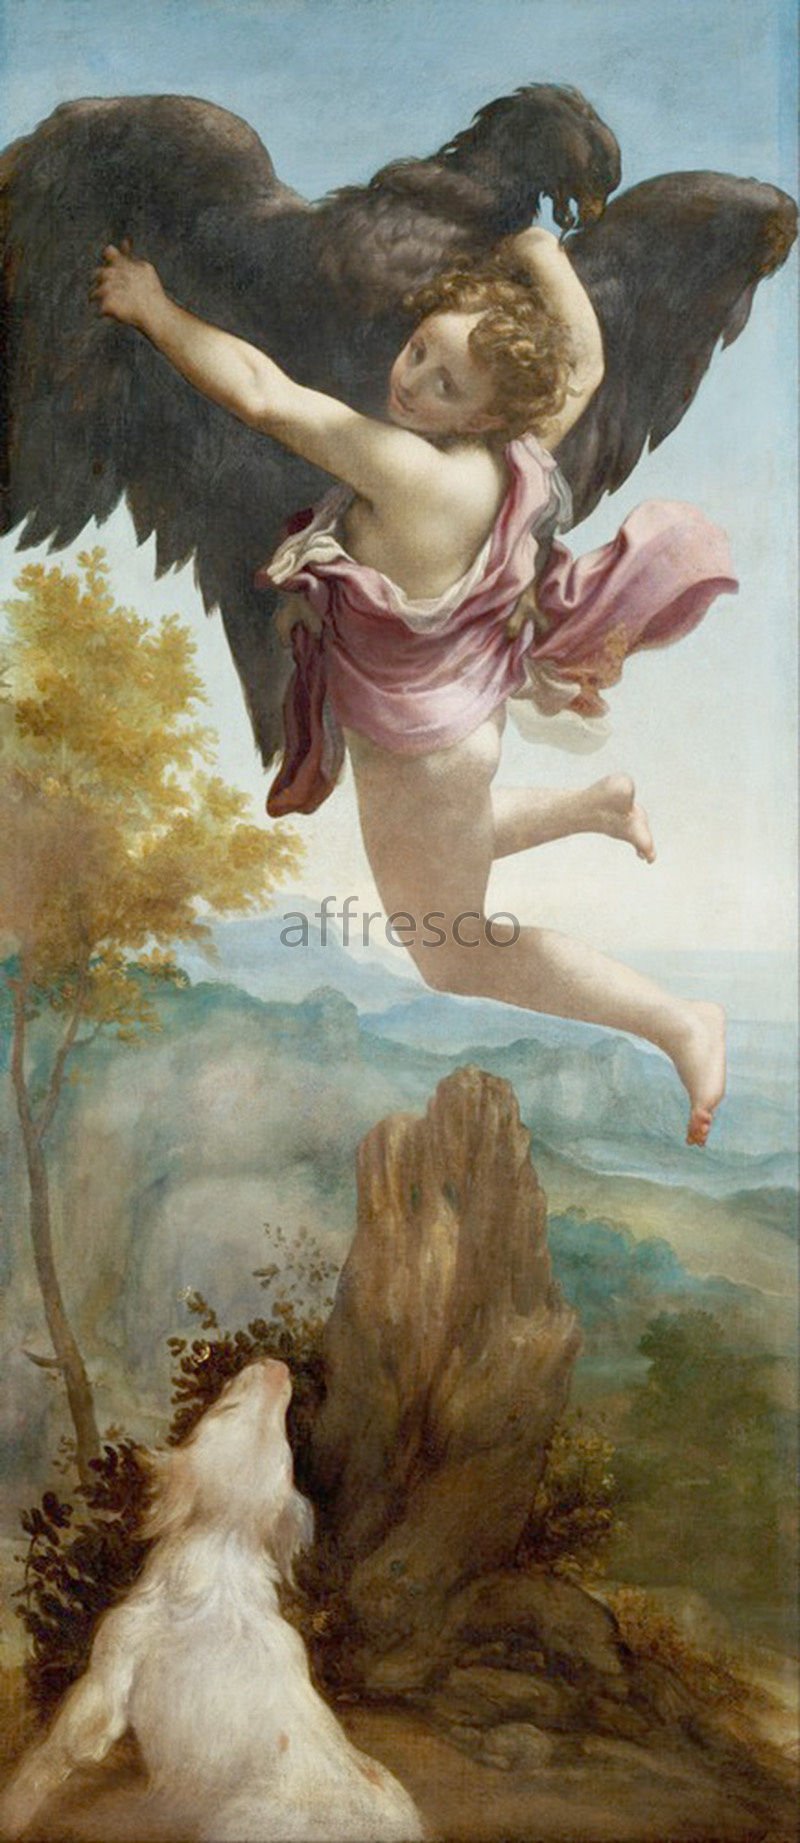 Classical antiquity themes | Antonio Allegri called Correggio The Abduction of Ganymede | Affresco Factory